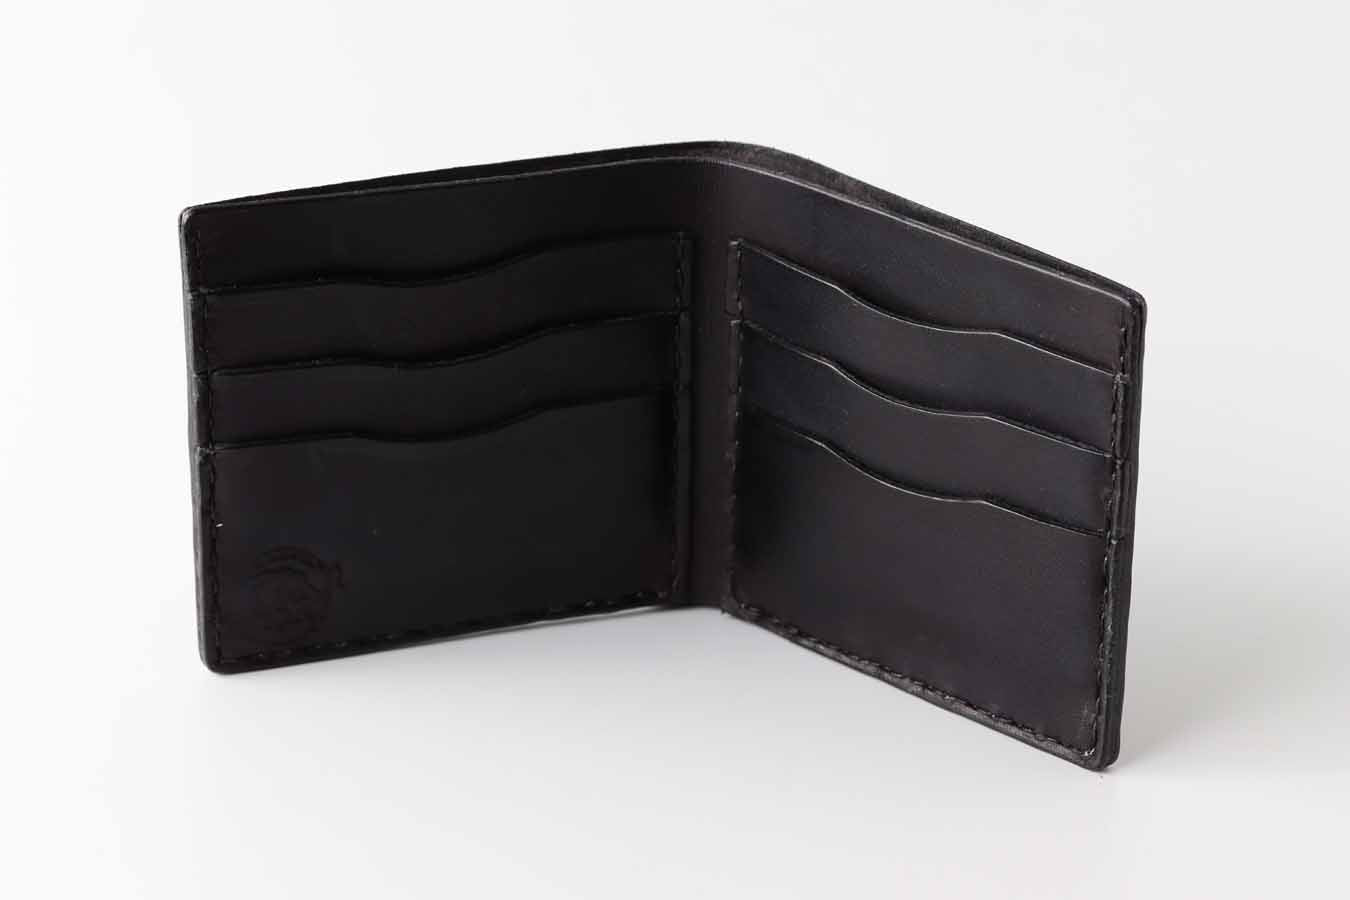  Black wallet